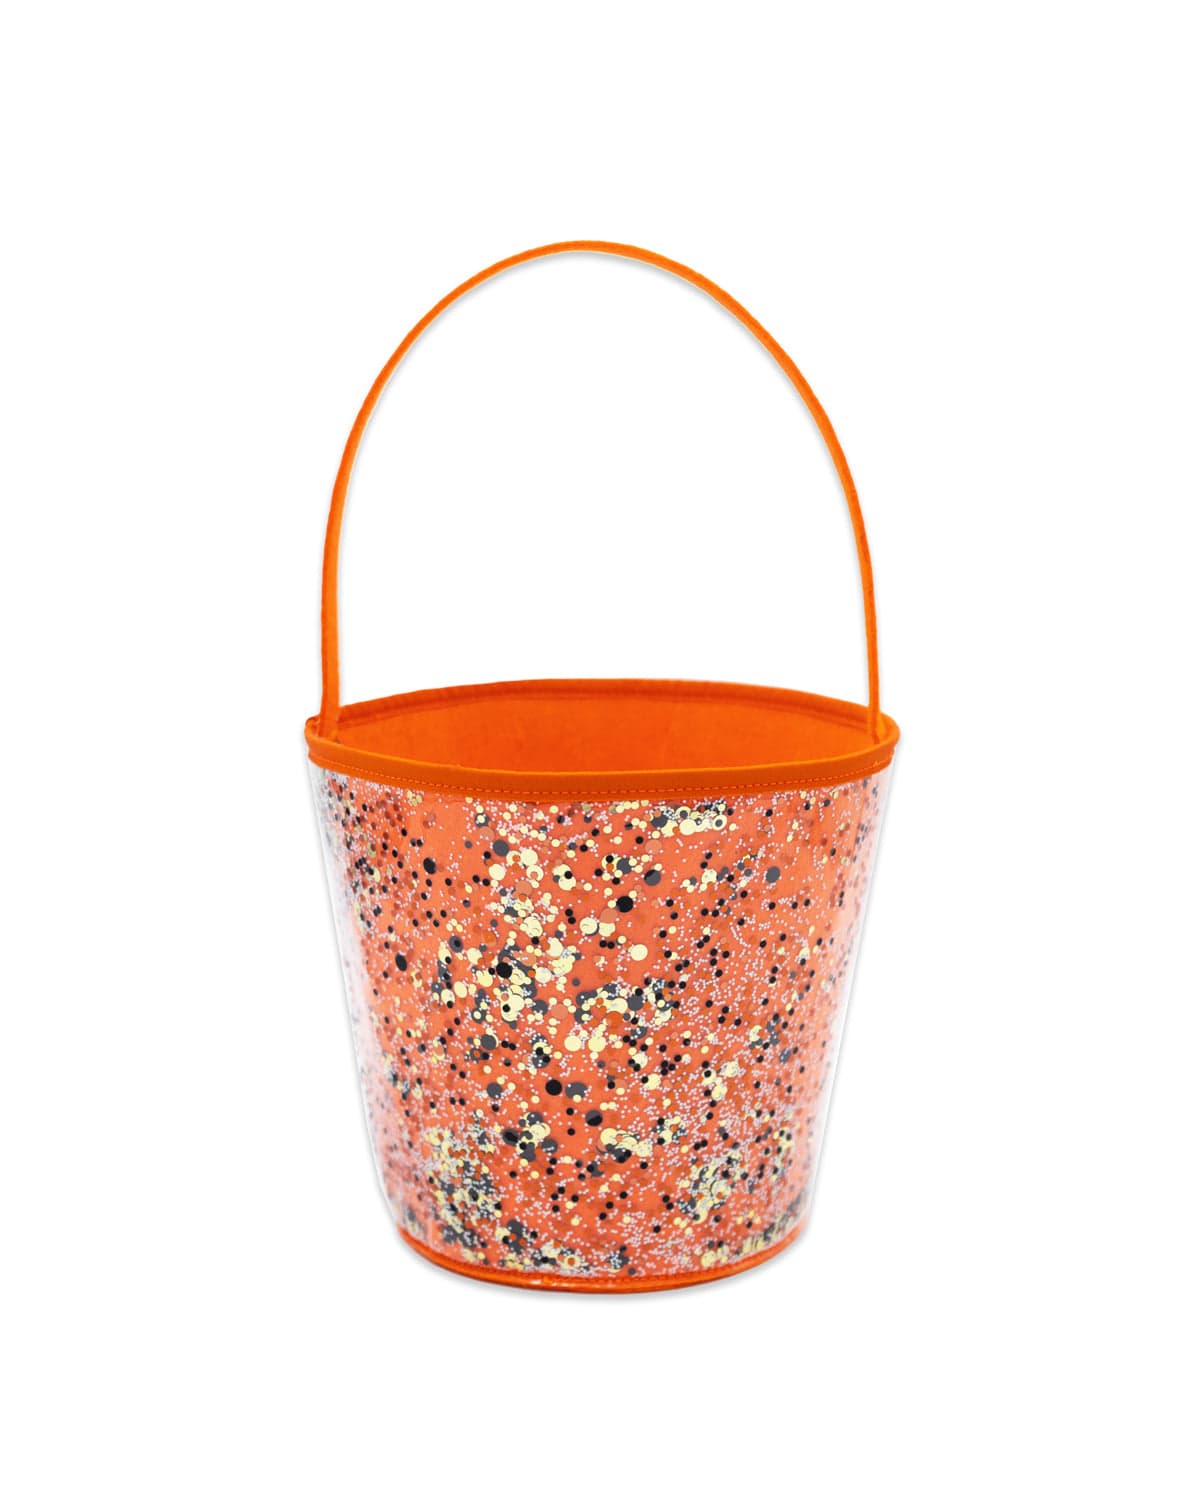 Orange Halloween bucket for trick or treat candy bucket basket. 